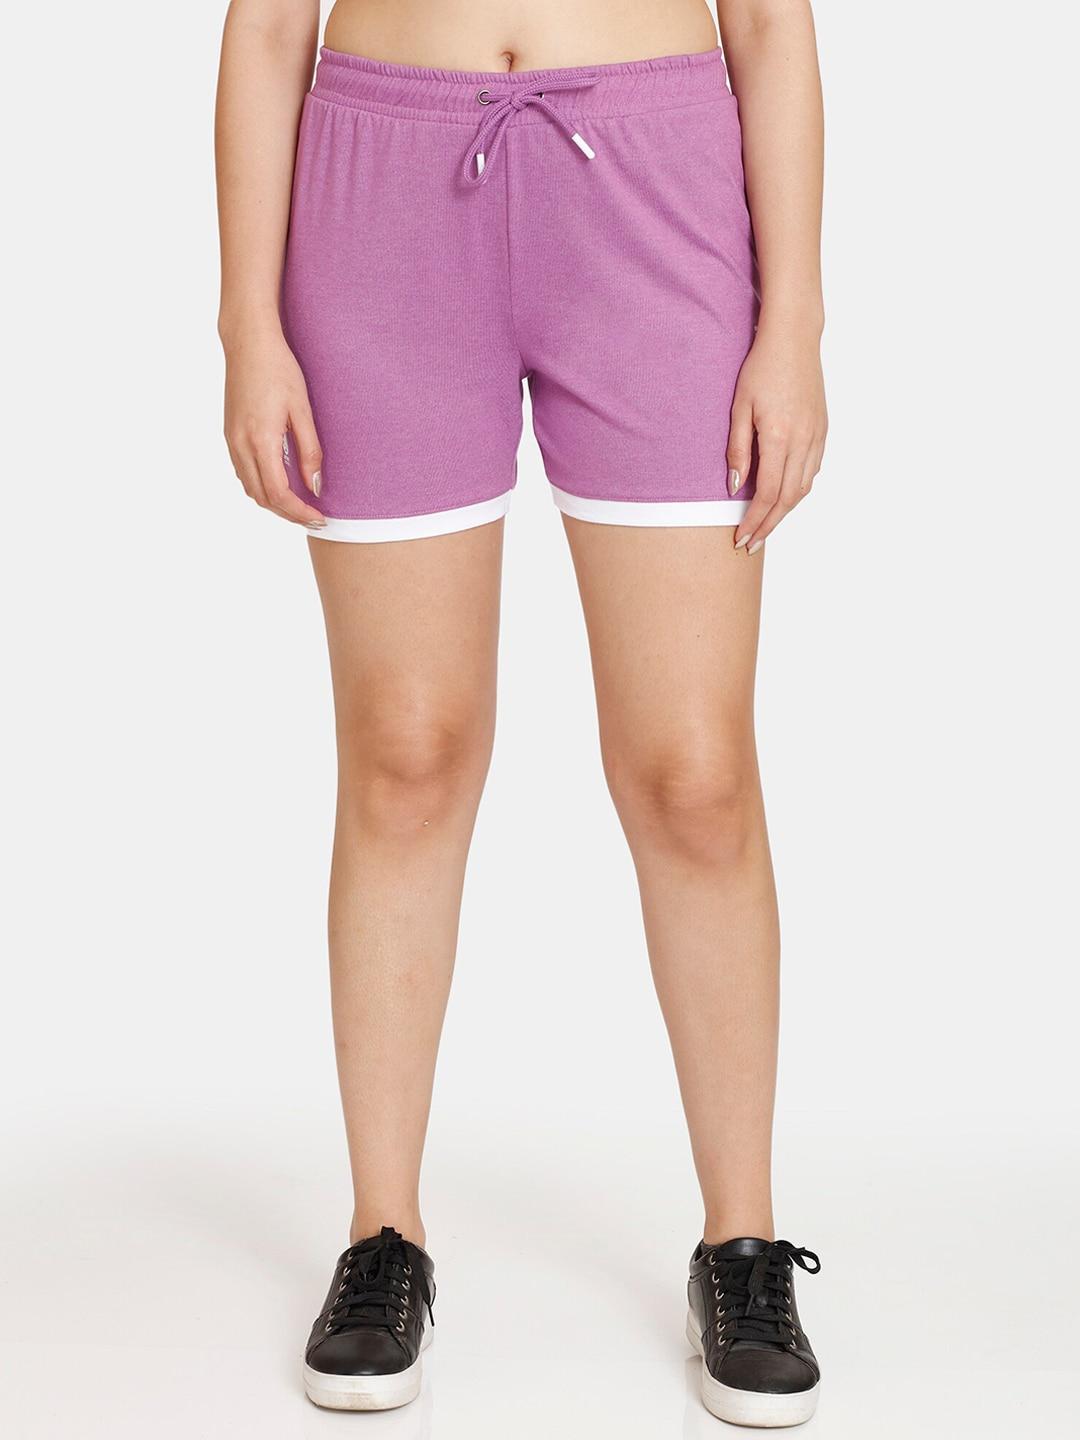 rosaline by zivame women purple shorts